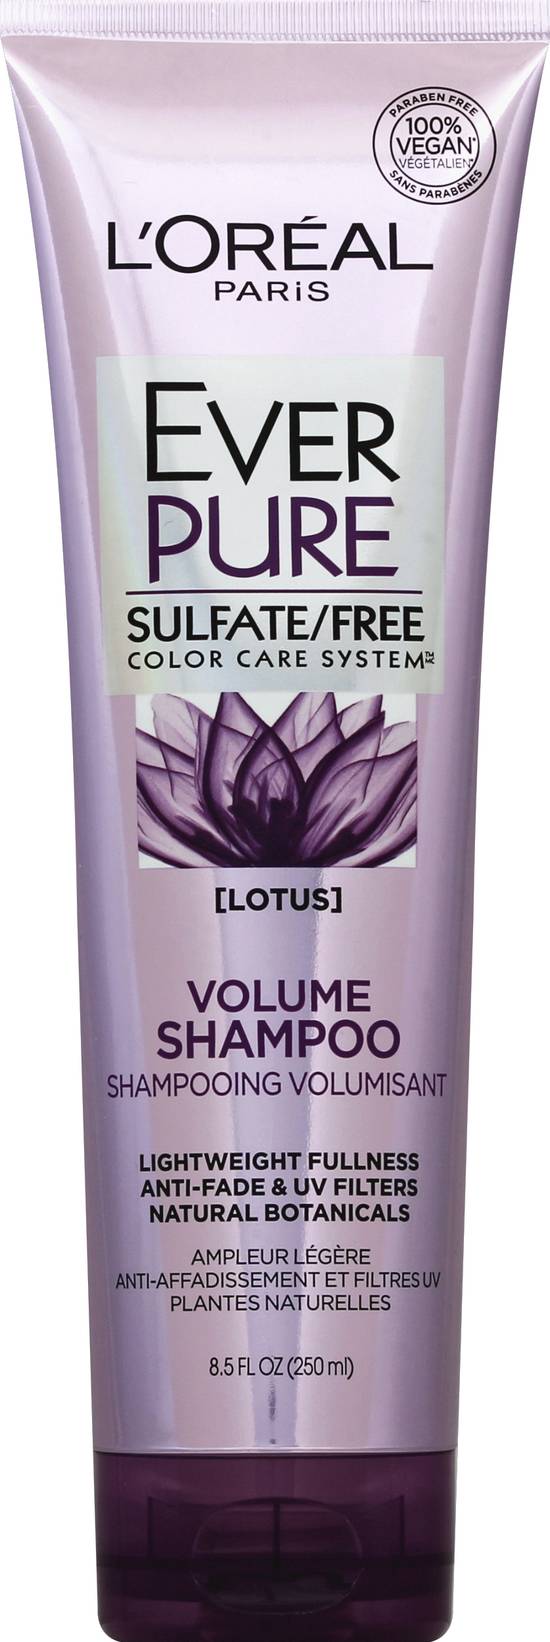 L'oreal Ever Pure Color Care System Lotus Volume Shampoo